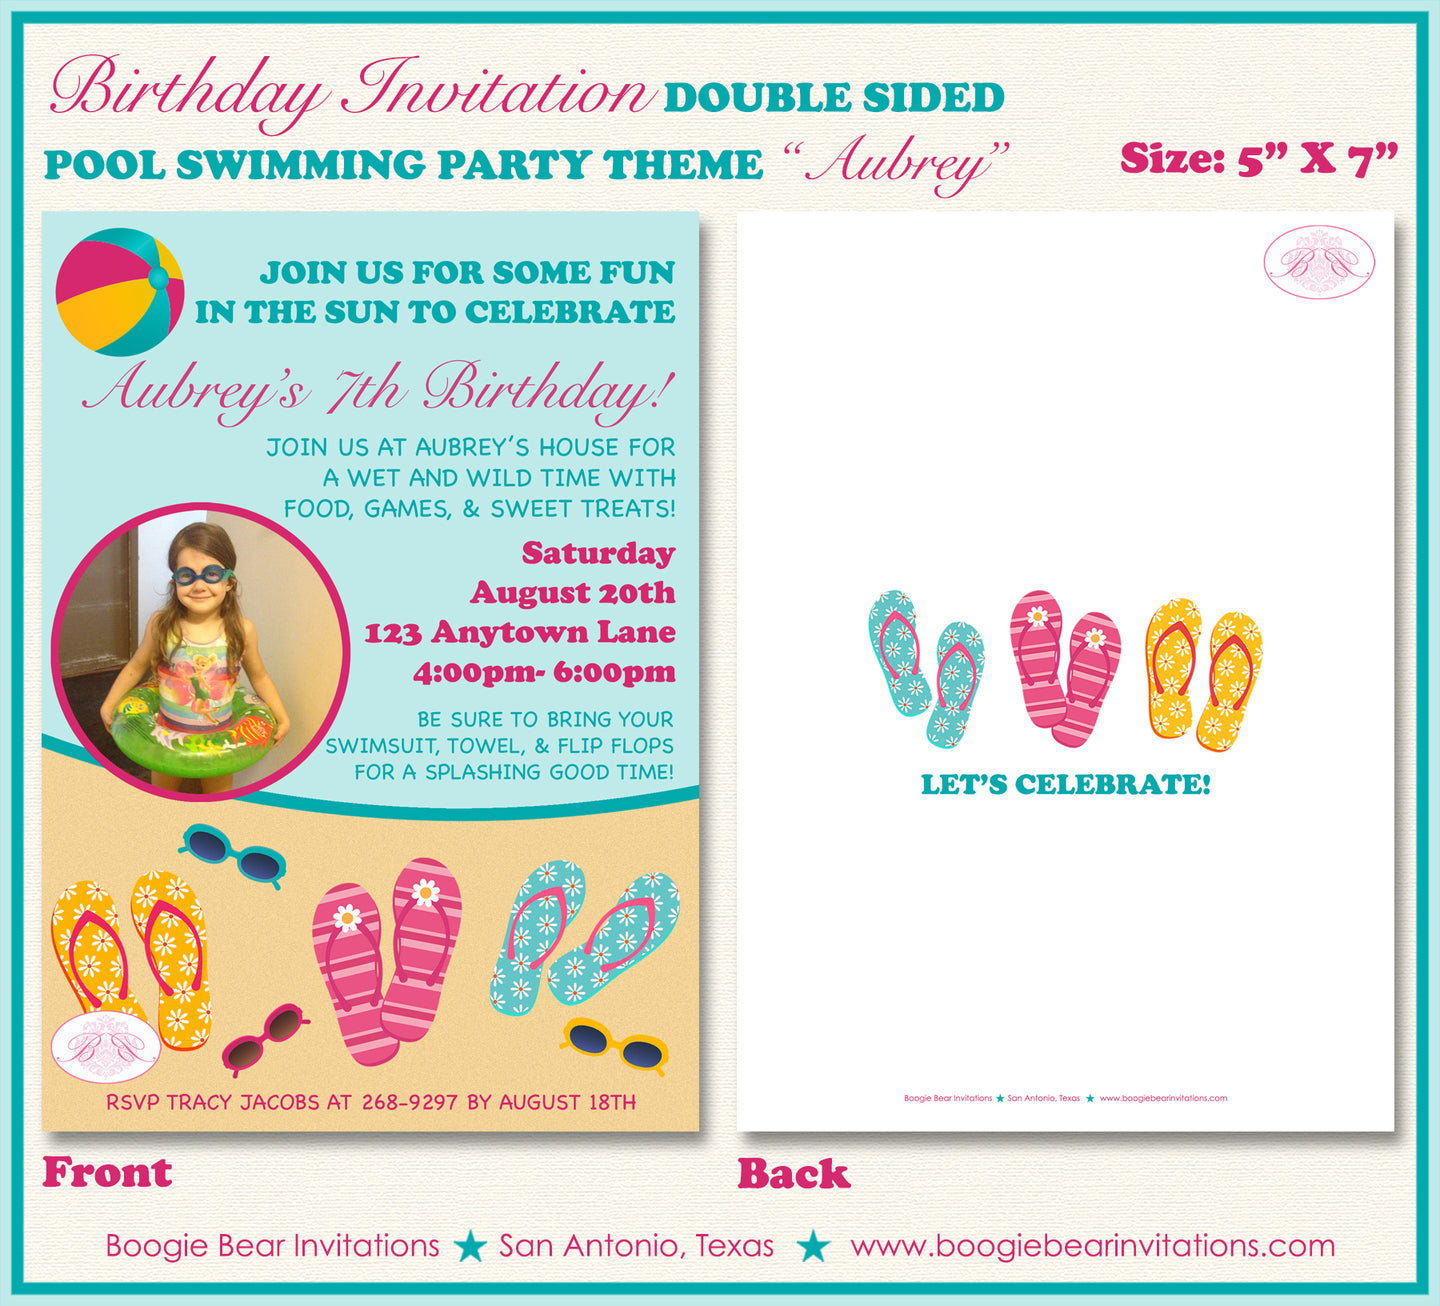 Flip Flop Birthday Party Invitation Photo Girl Pink Pool Swimming Boogie Bear Invitations Aubrey Theme Paperless Printable Printed